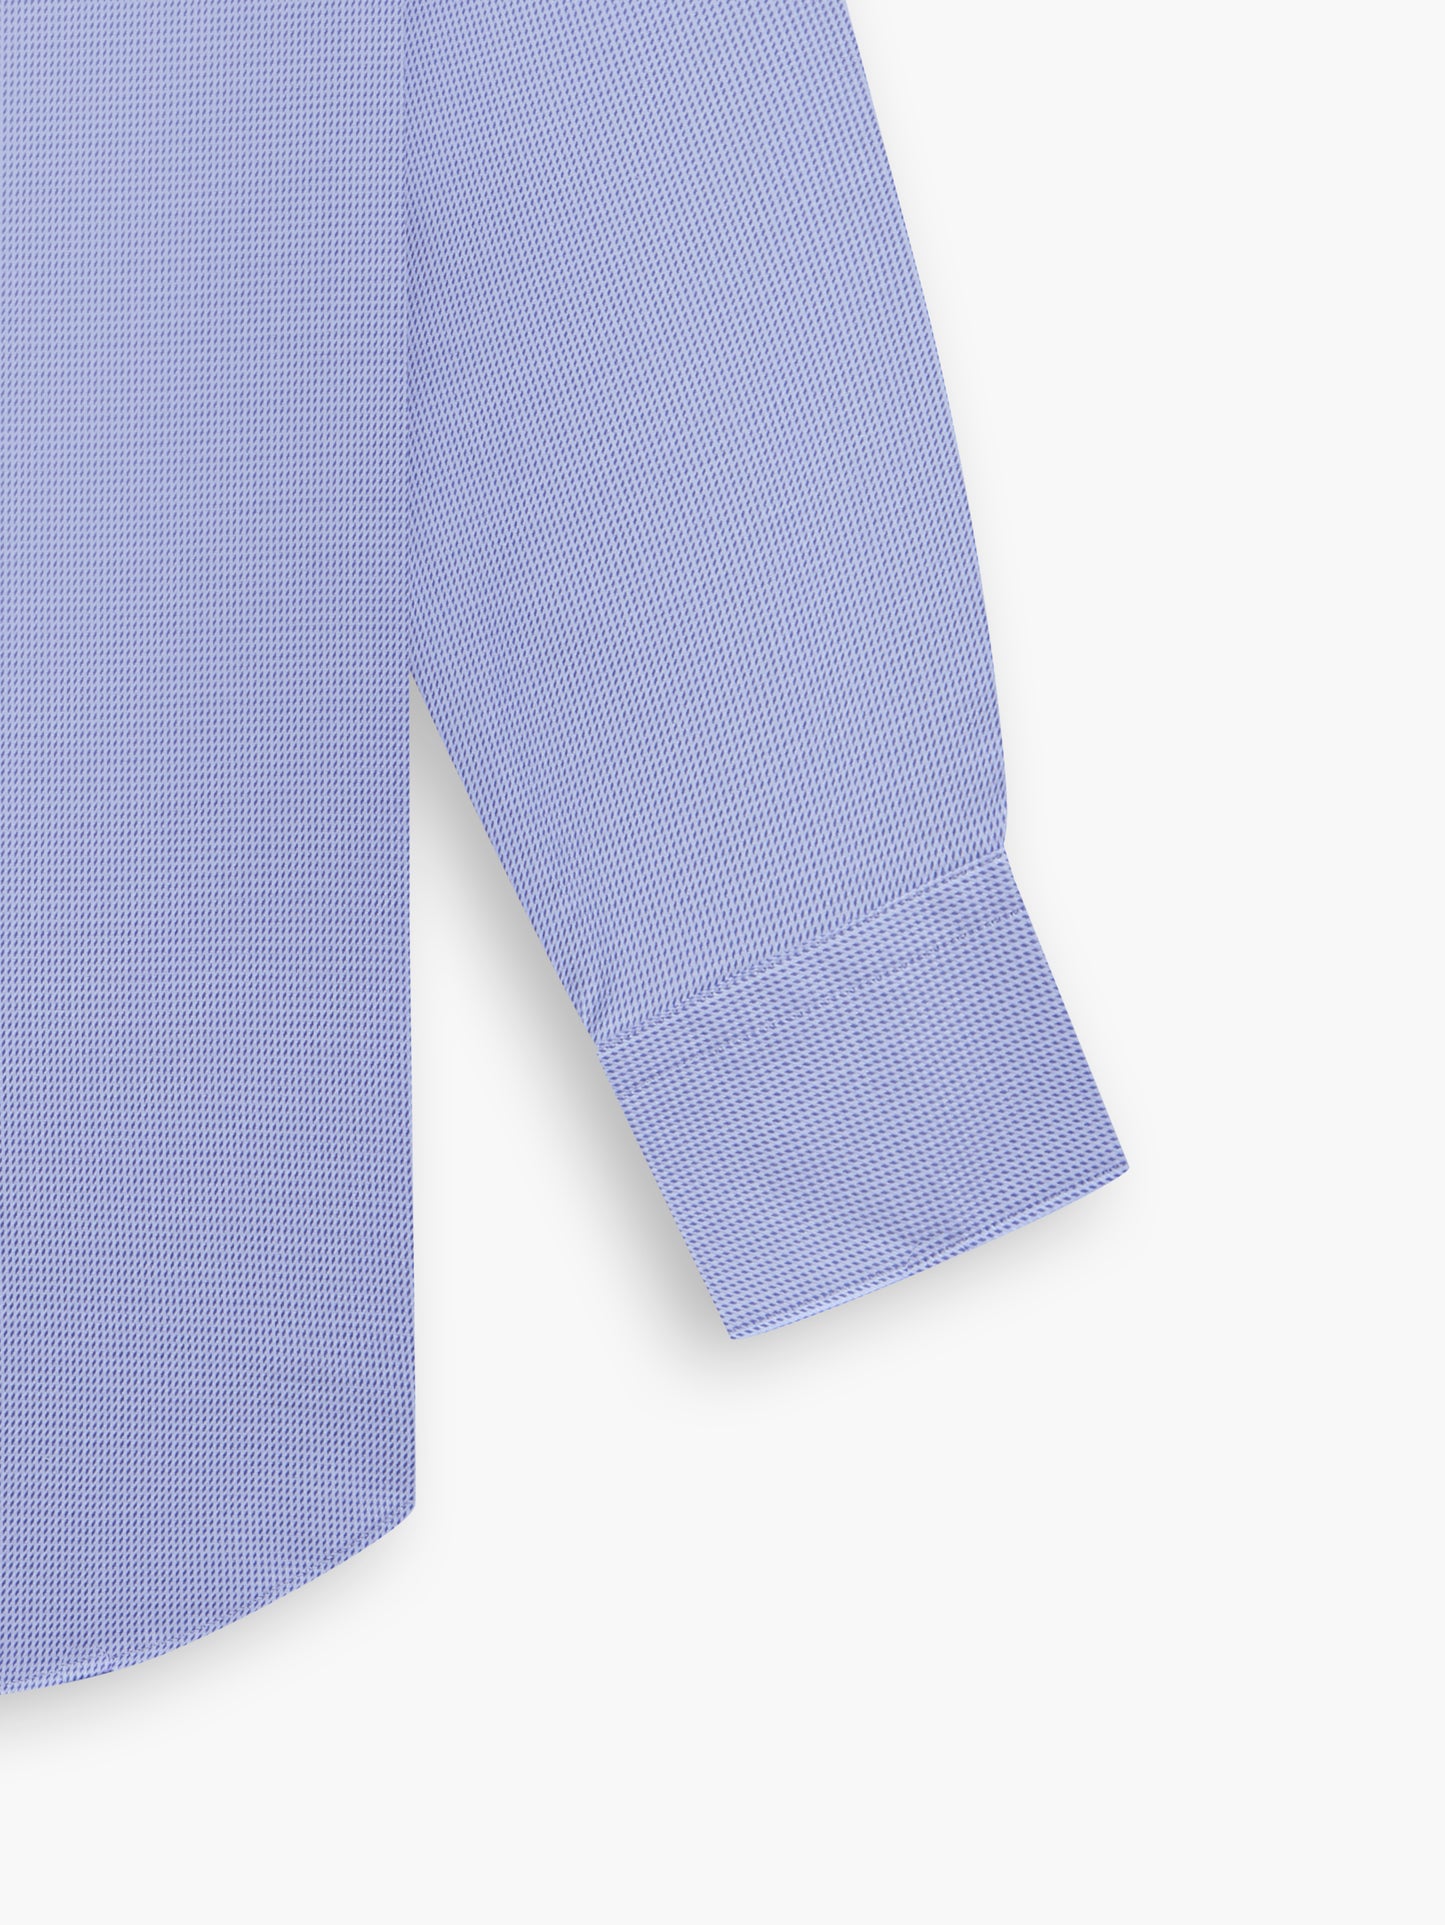 Blue Micro Rhombus Stretch Twill Super Fitted Single Cuff Classic Collar Shirt